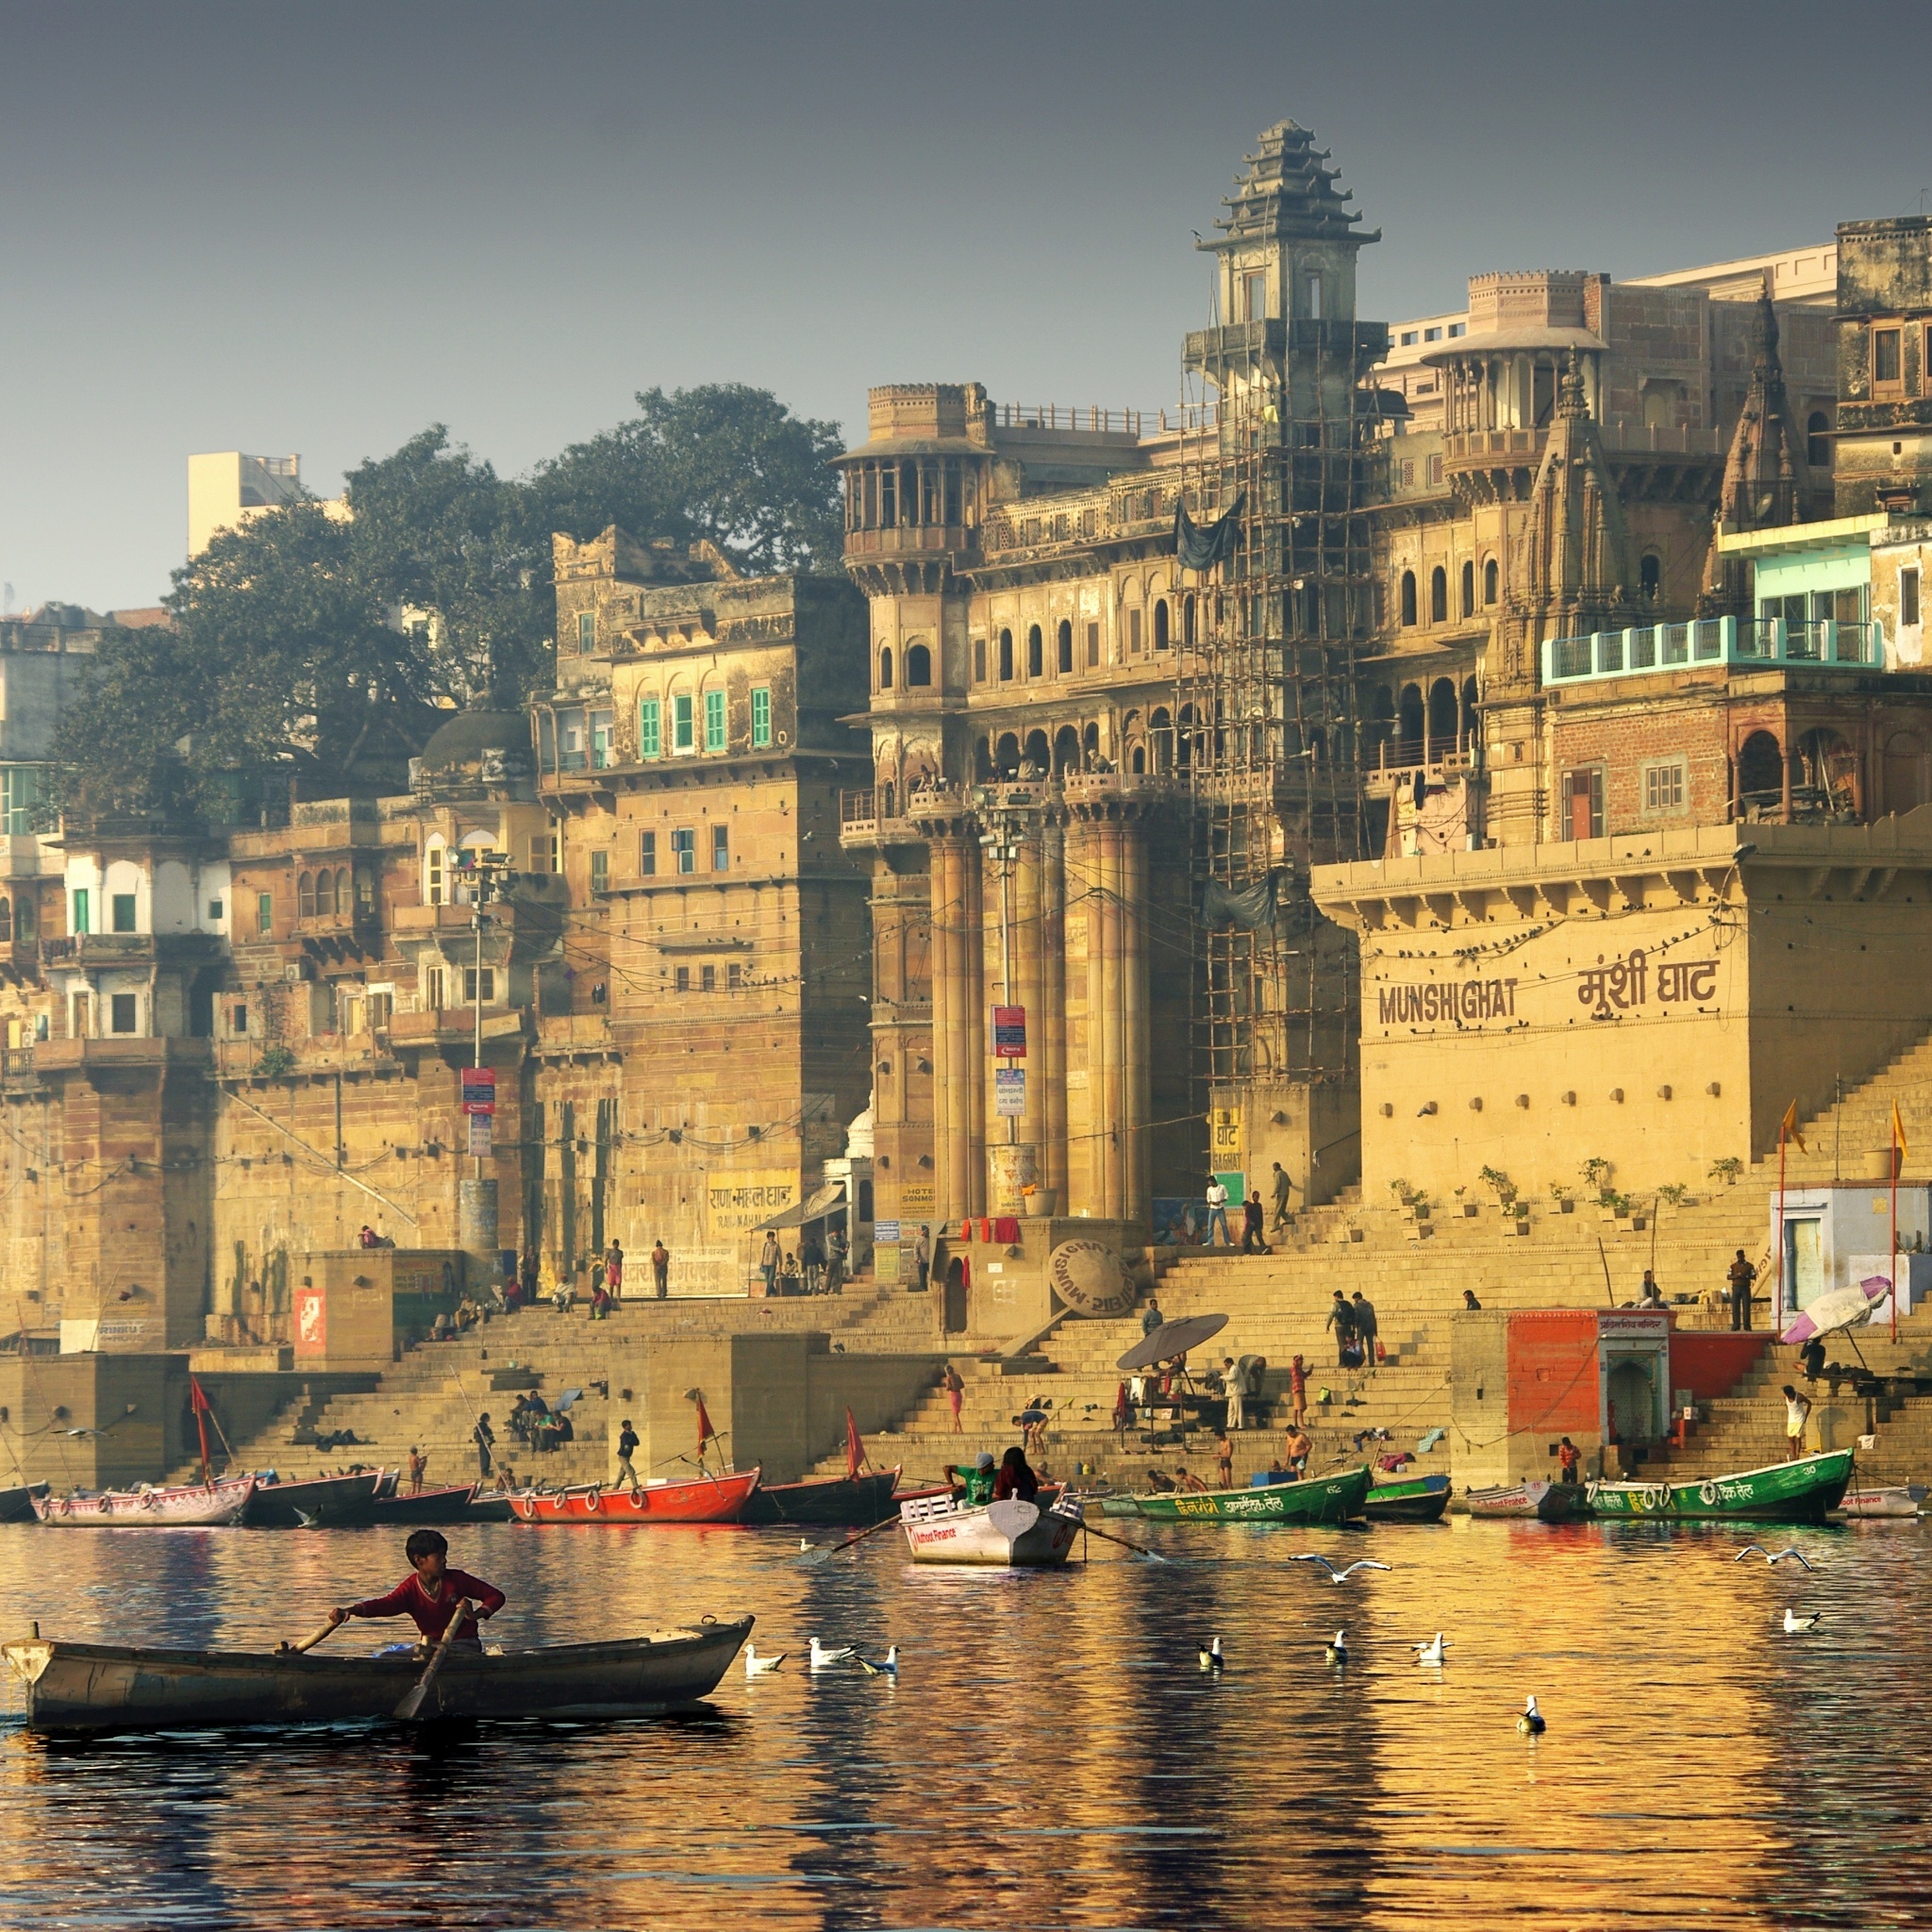 Das Varanasi City in India Wallpaper 2048x2048